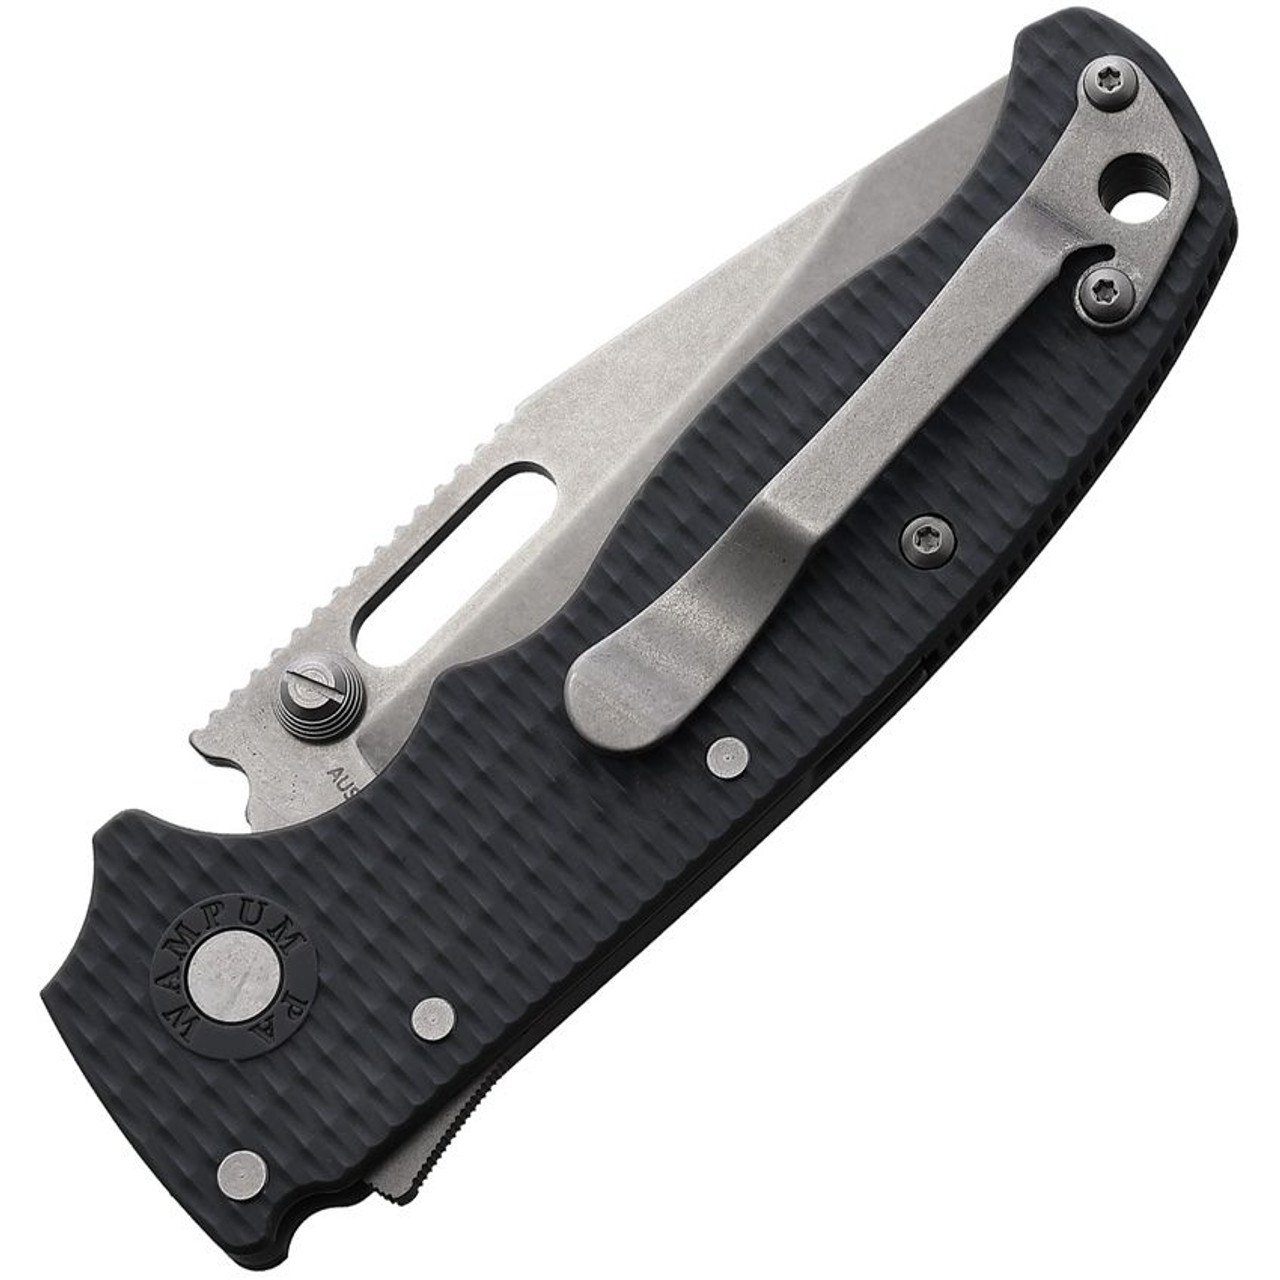 Demko AD20.5 Shark Lock - 3.25" AUS-10A Stonewash Clip Point Blade, Gray Textured Grivory Handle